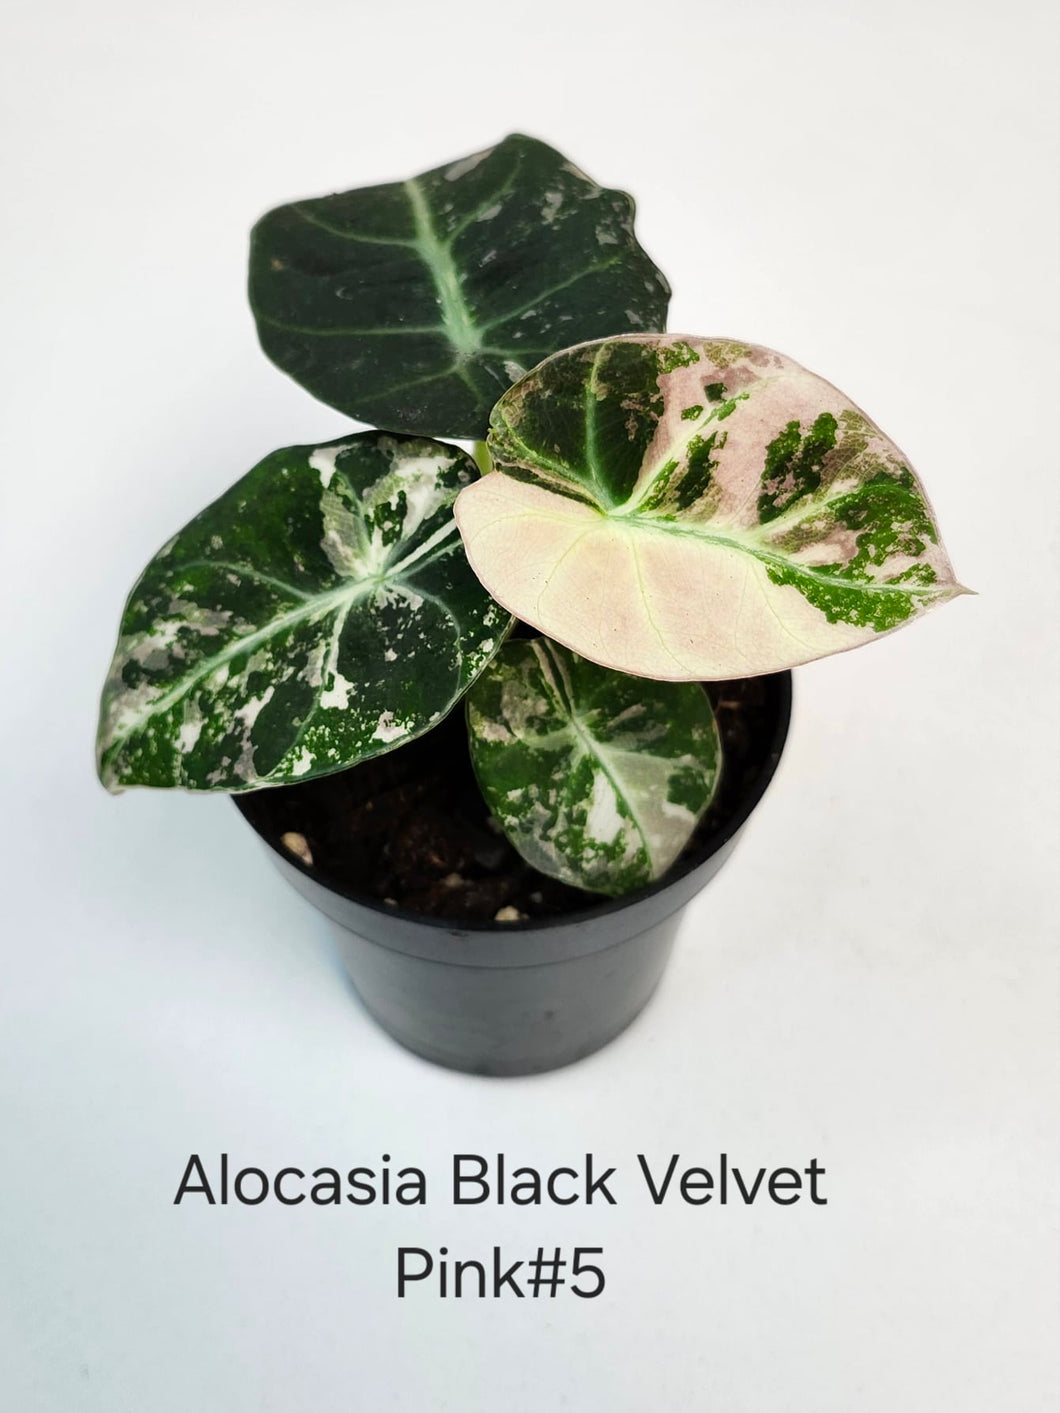 Alocasia black velvet pink #5